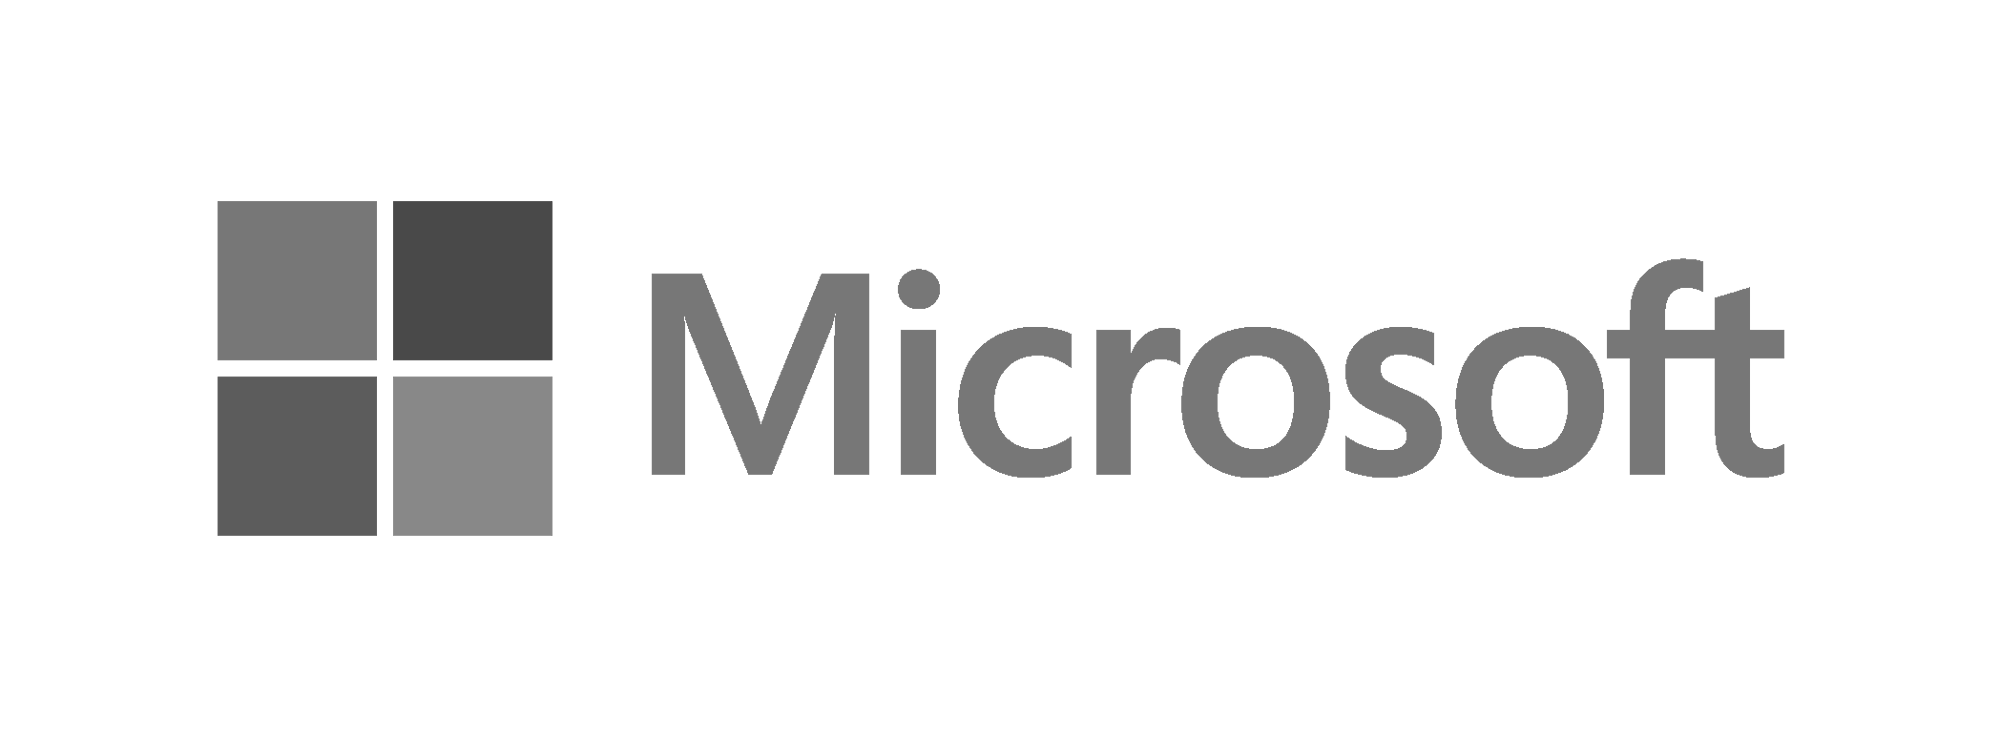 Microsoft logo black and white